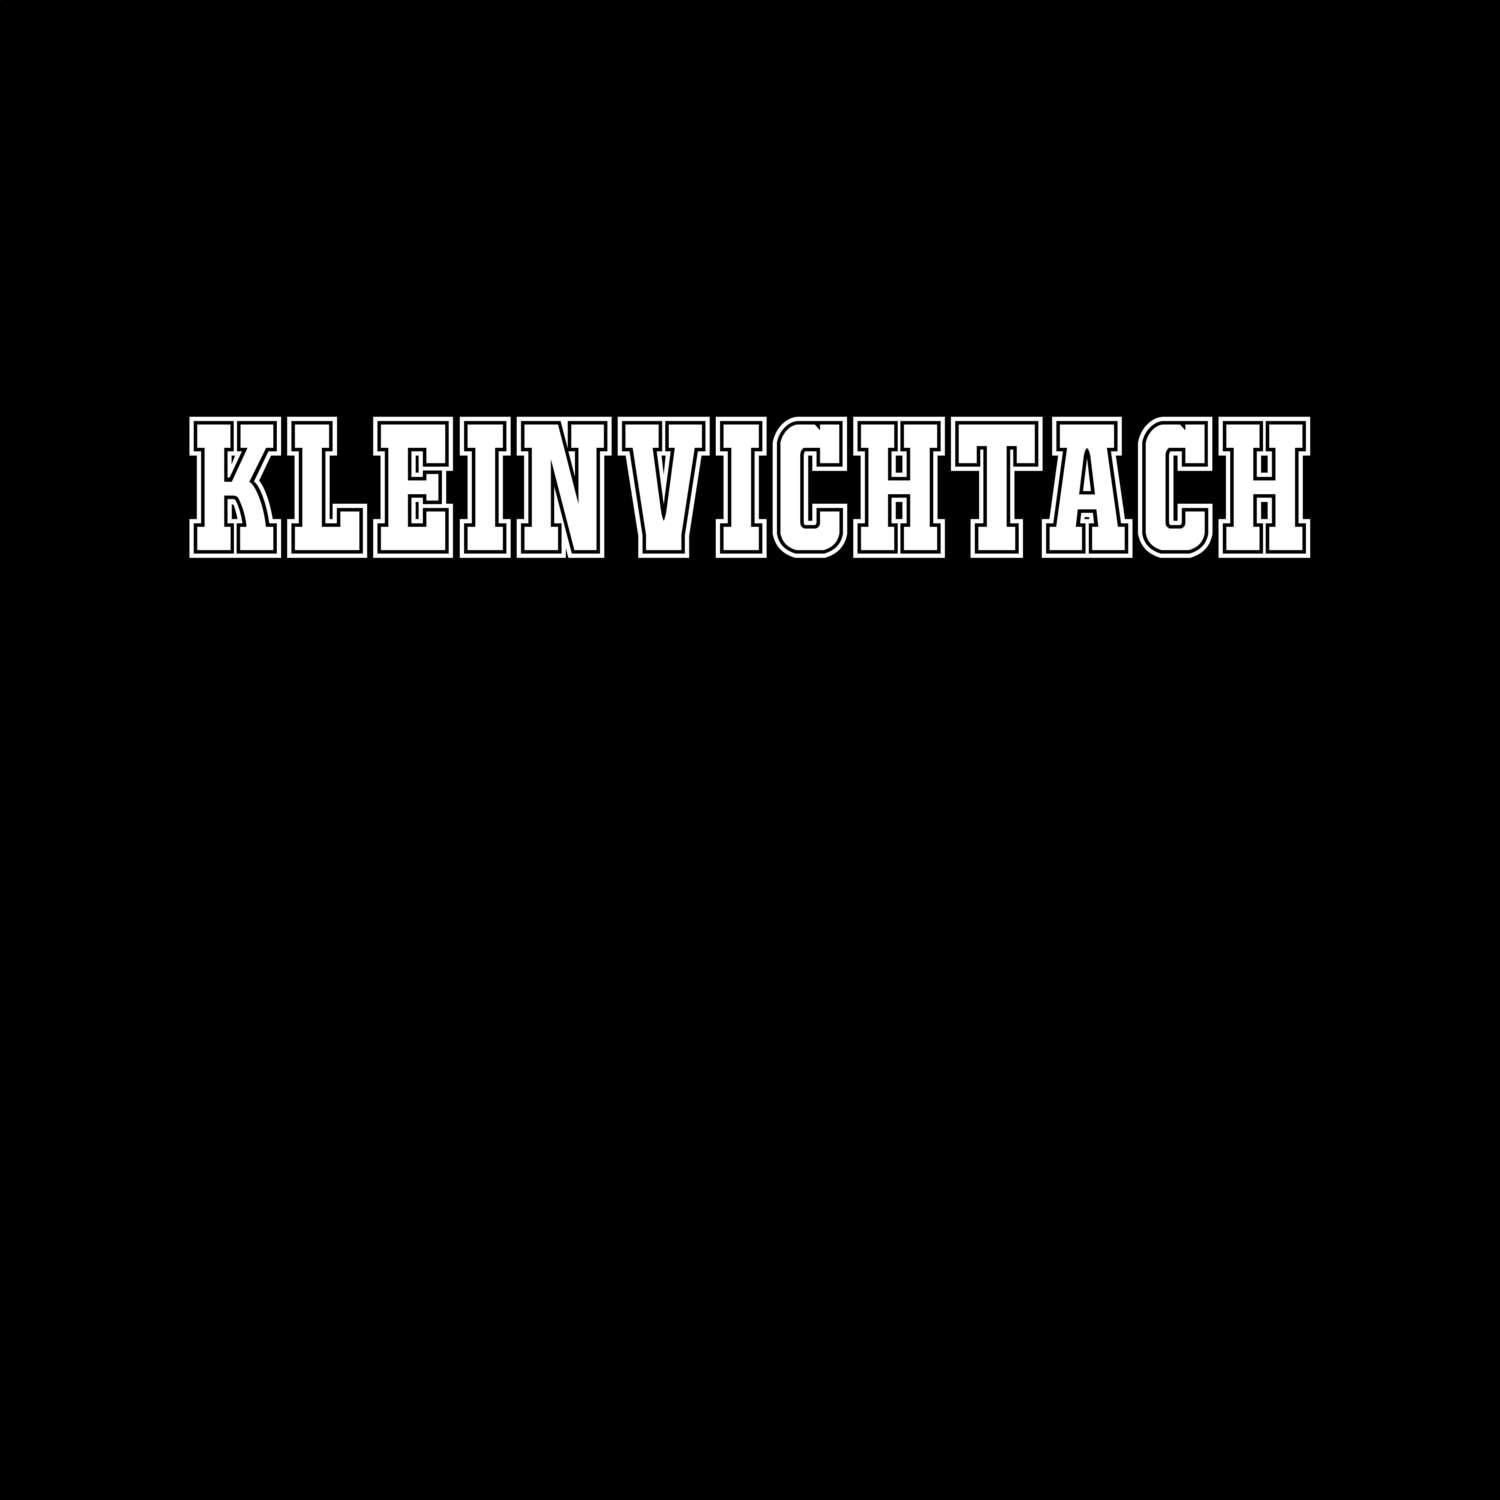 Kleinvichtach T-Shirt »Classic«